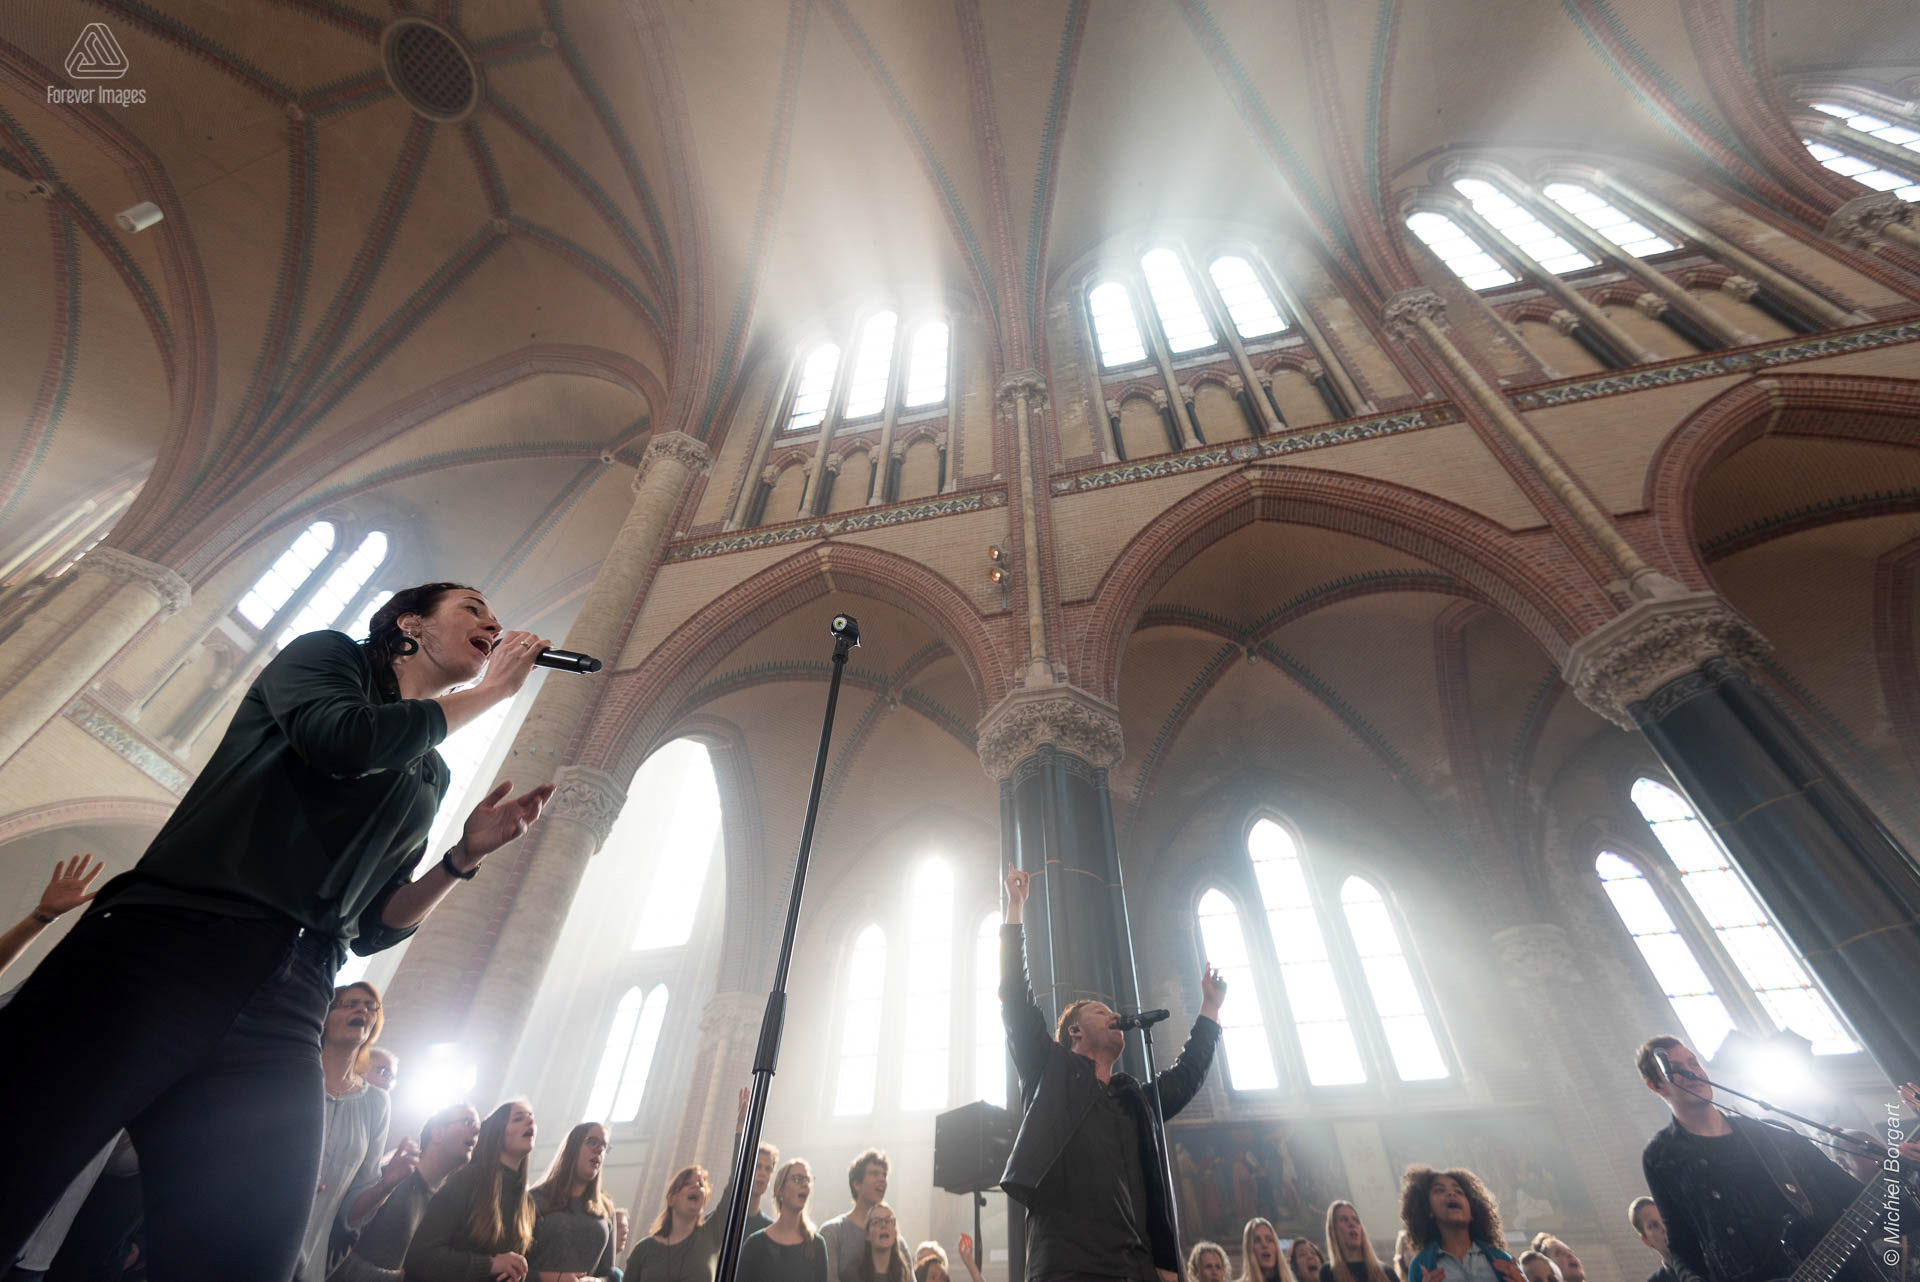 Worship concert singer worship leader | InSalvation Gouwekerk Gouda Jafeth Bekx Andy Stuijzand | Photographer Michiel Borgart - Forever Images.